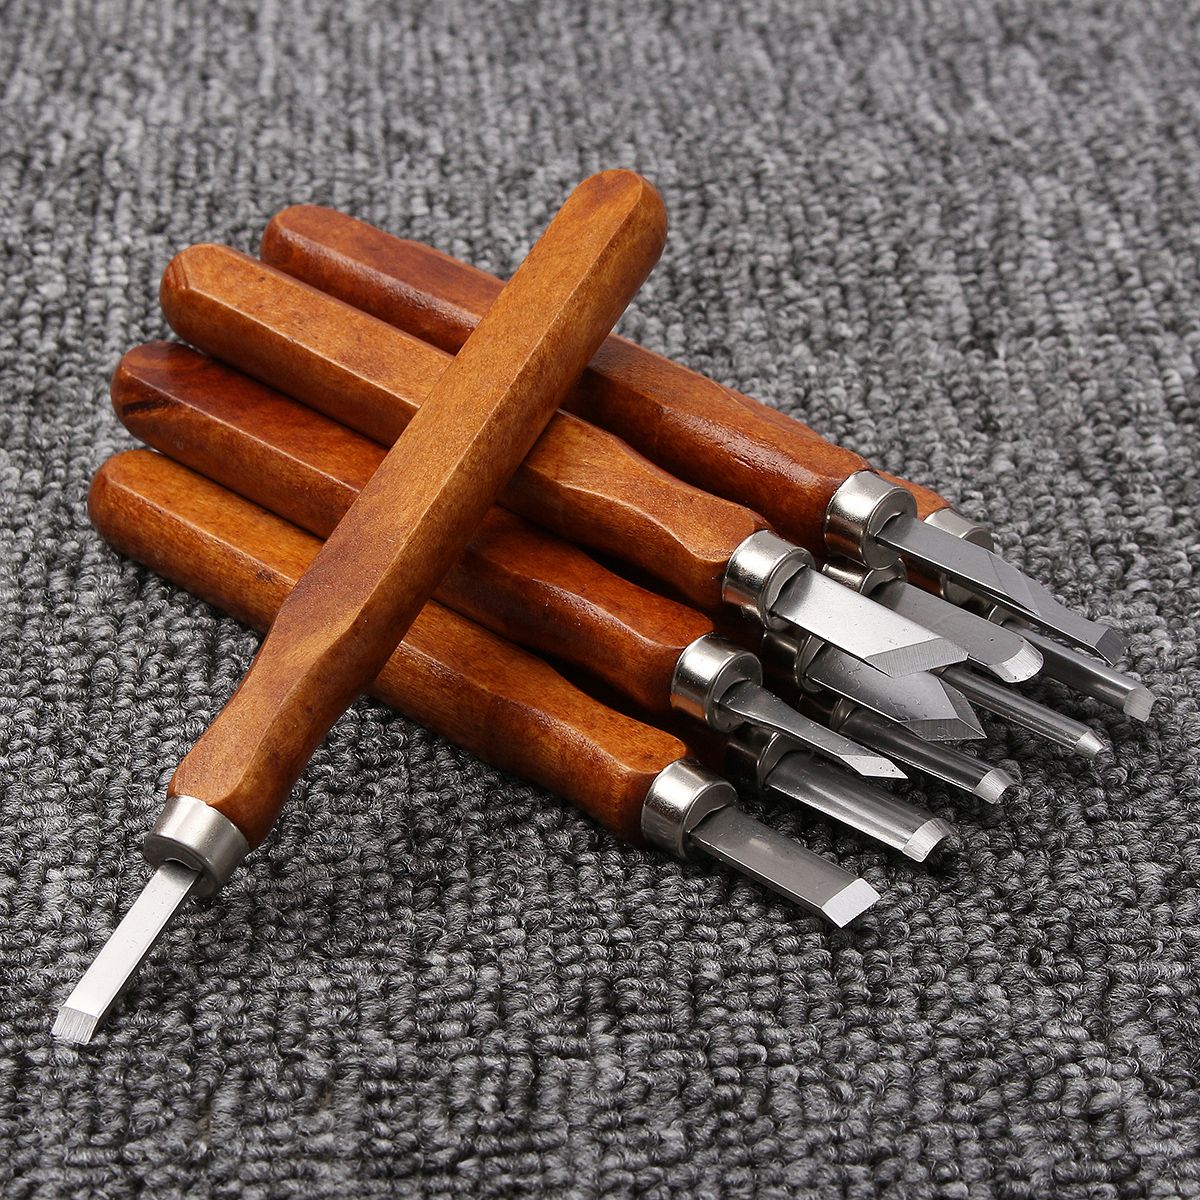 12Pcs-Wood-Carving-Wood-Working-Hand-Chisel-Set-Professional-Lathe-Gouges-Tool-1131106